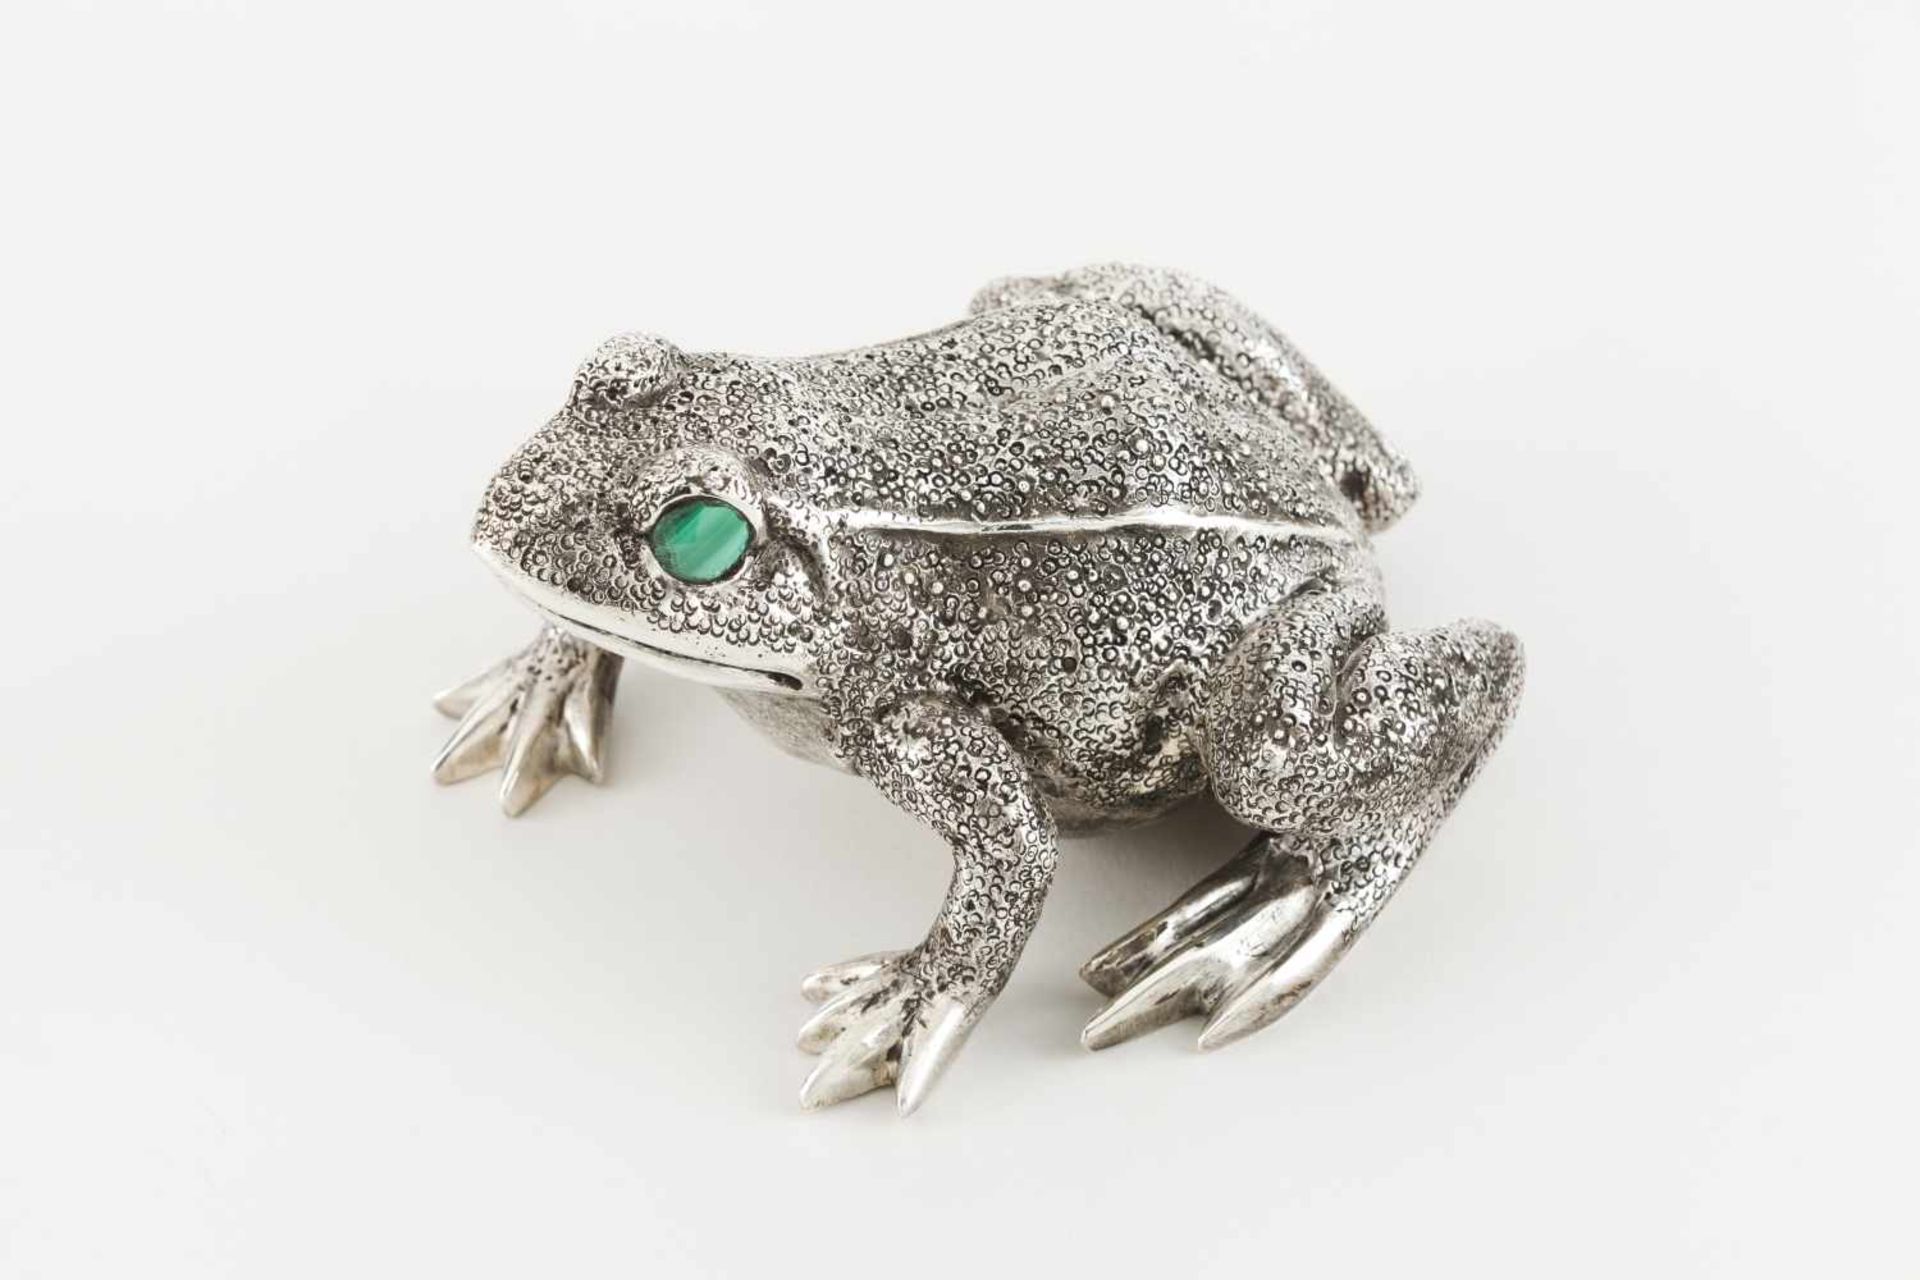 A toadTextured silverRealistic depiction with malachite eyesOporto hallmark, Eagle 925/